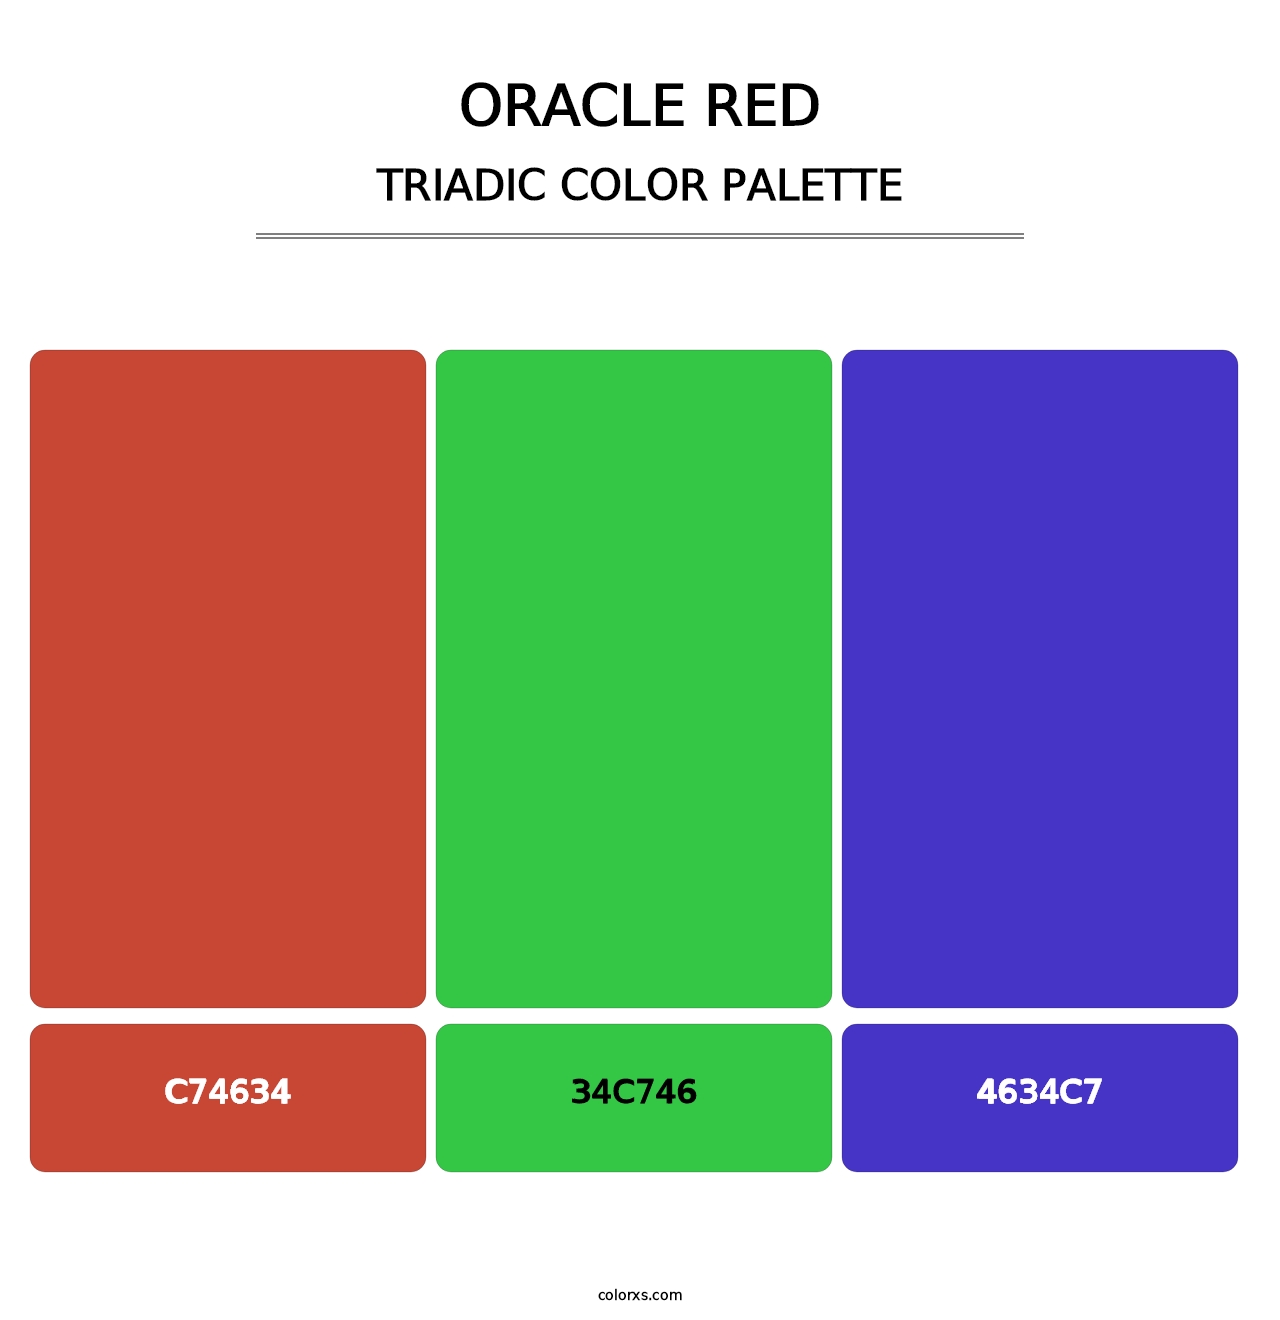 Oracle Red - Triadic Color Palette